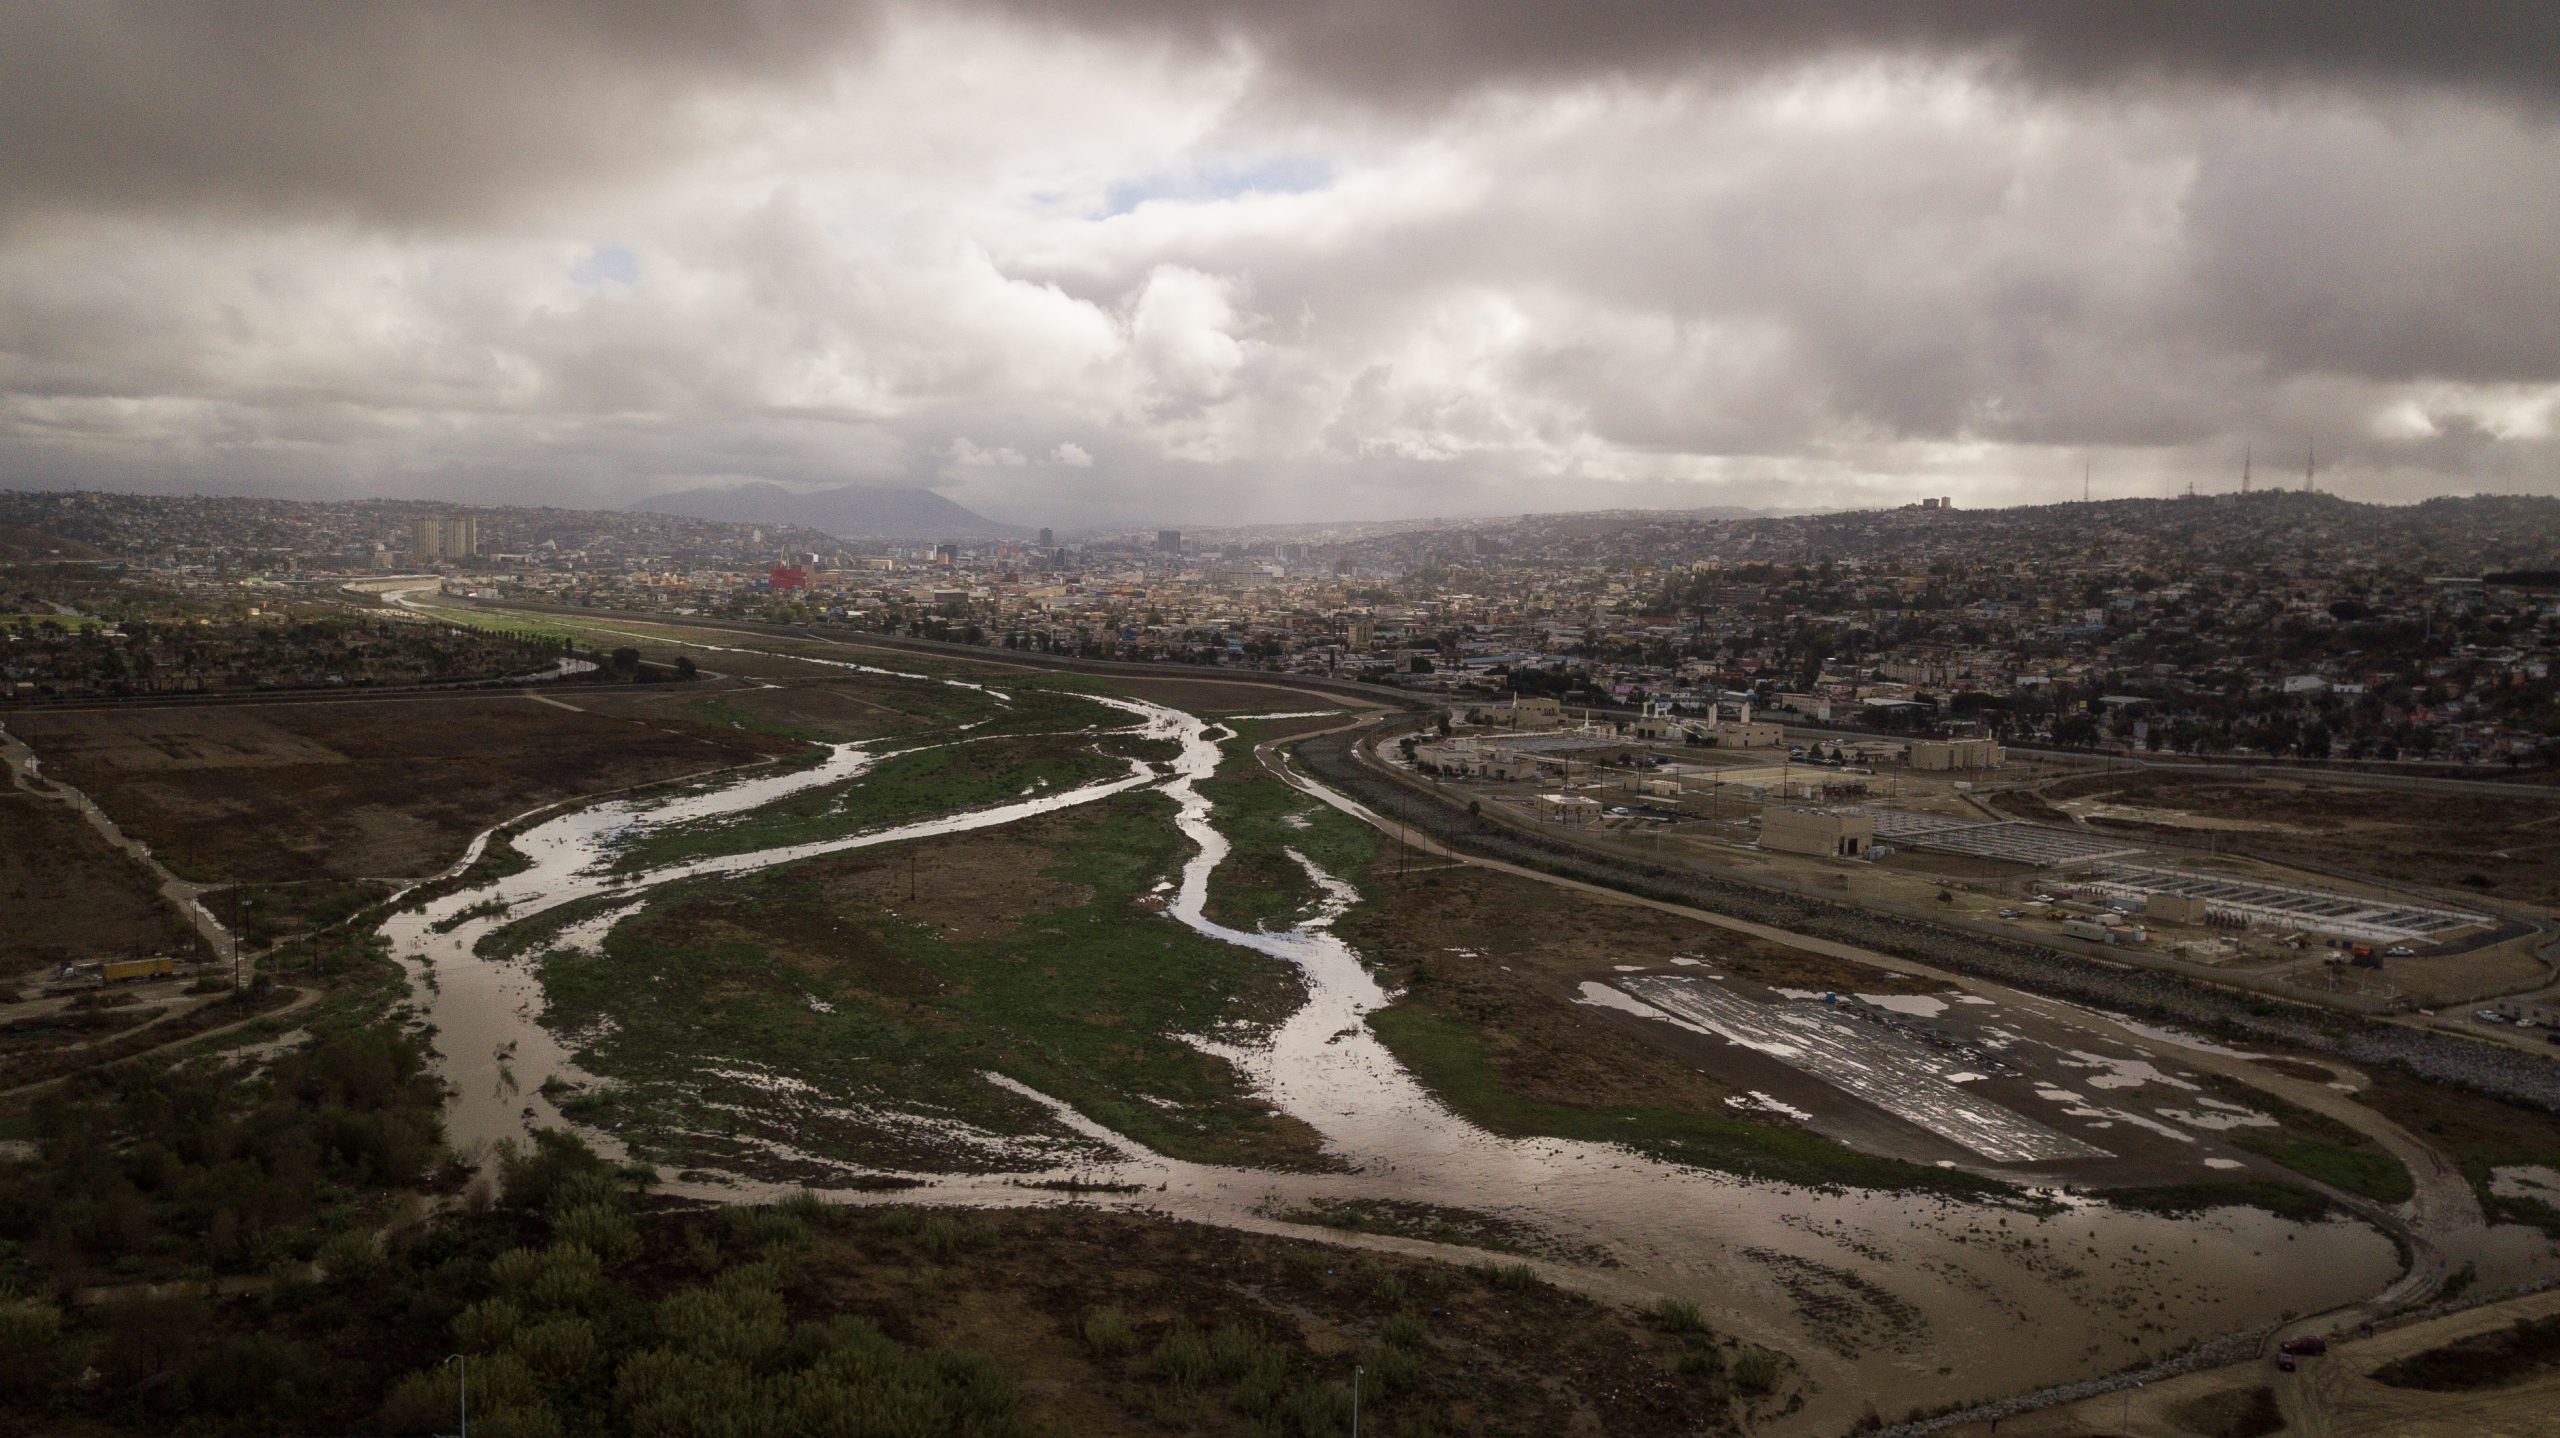 Tijuana River Toxic Border Sewage Crisis